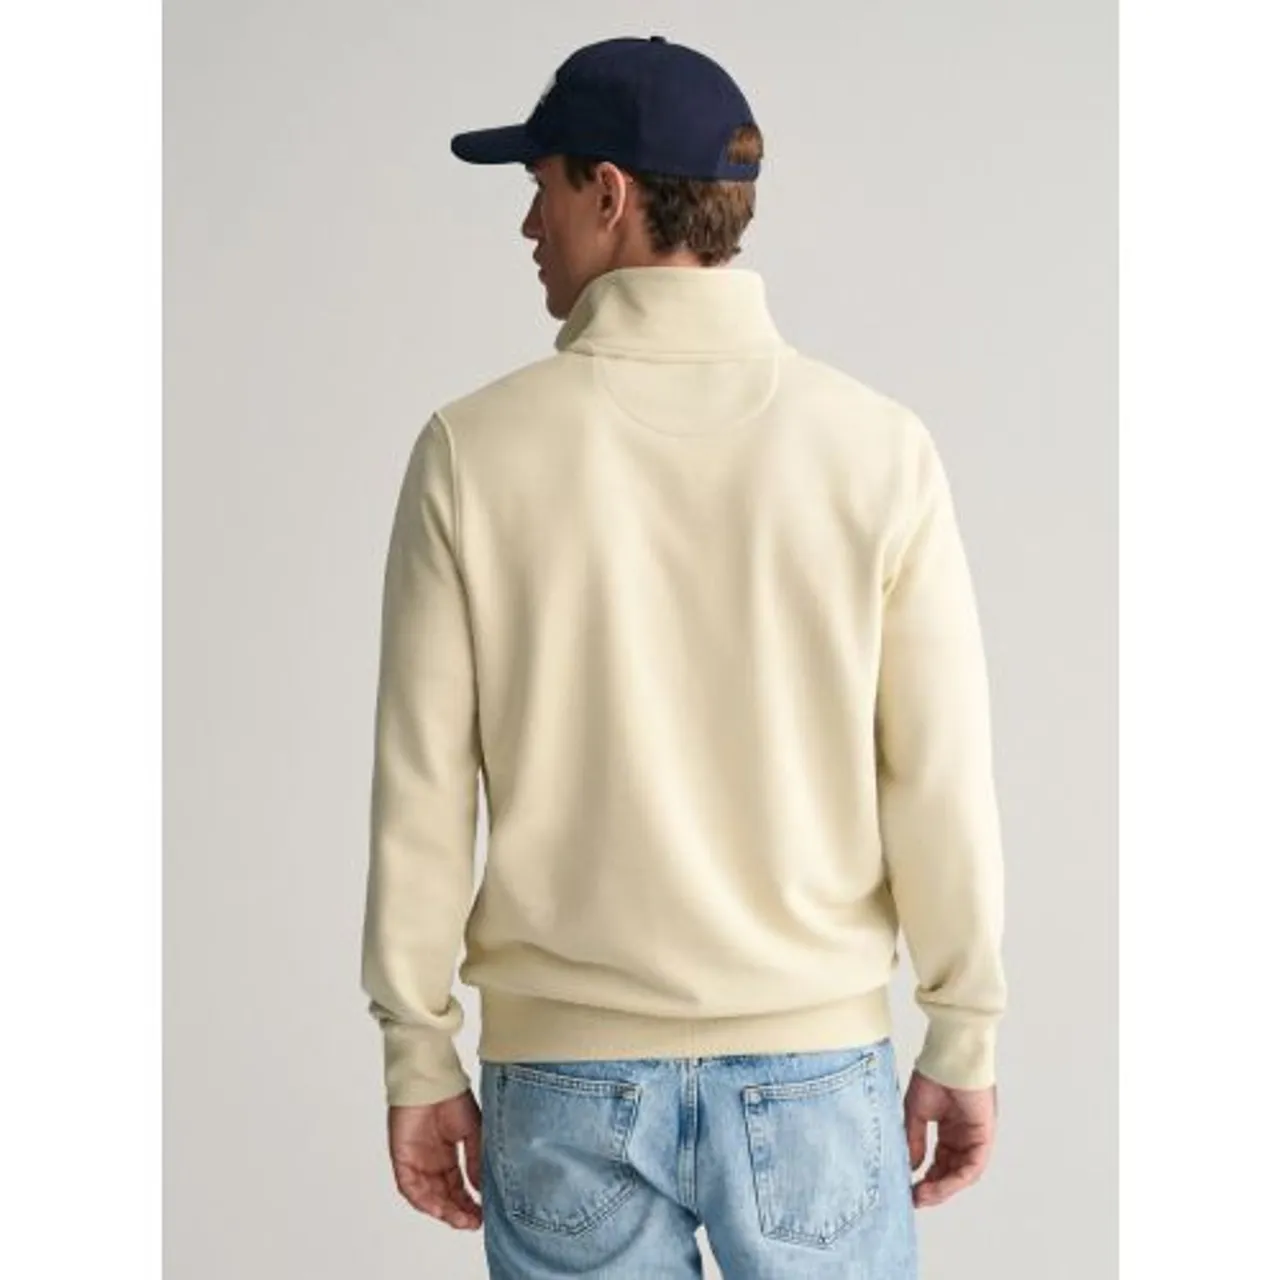 GANT Mens Silky Beige Regular Fit Shield Logo Half Zip Sweatshirt